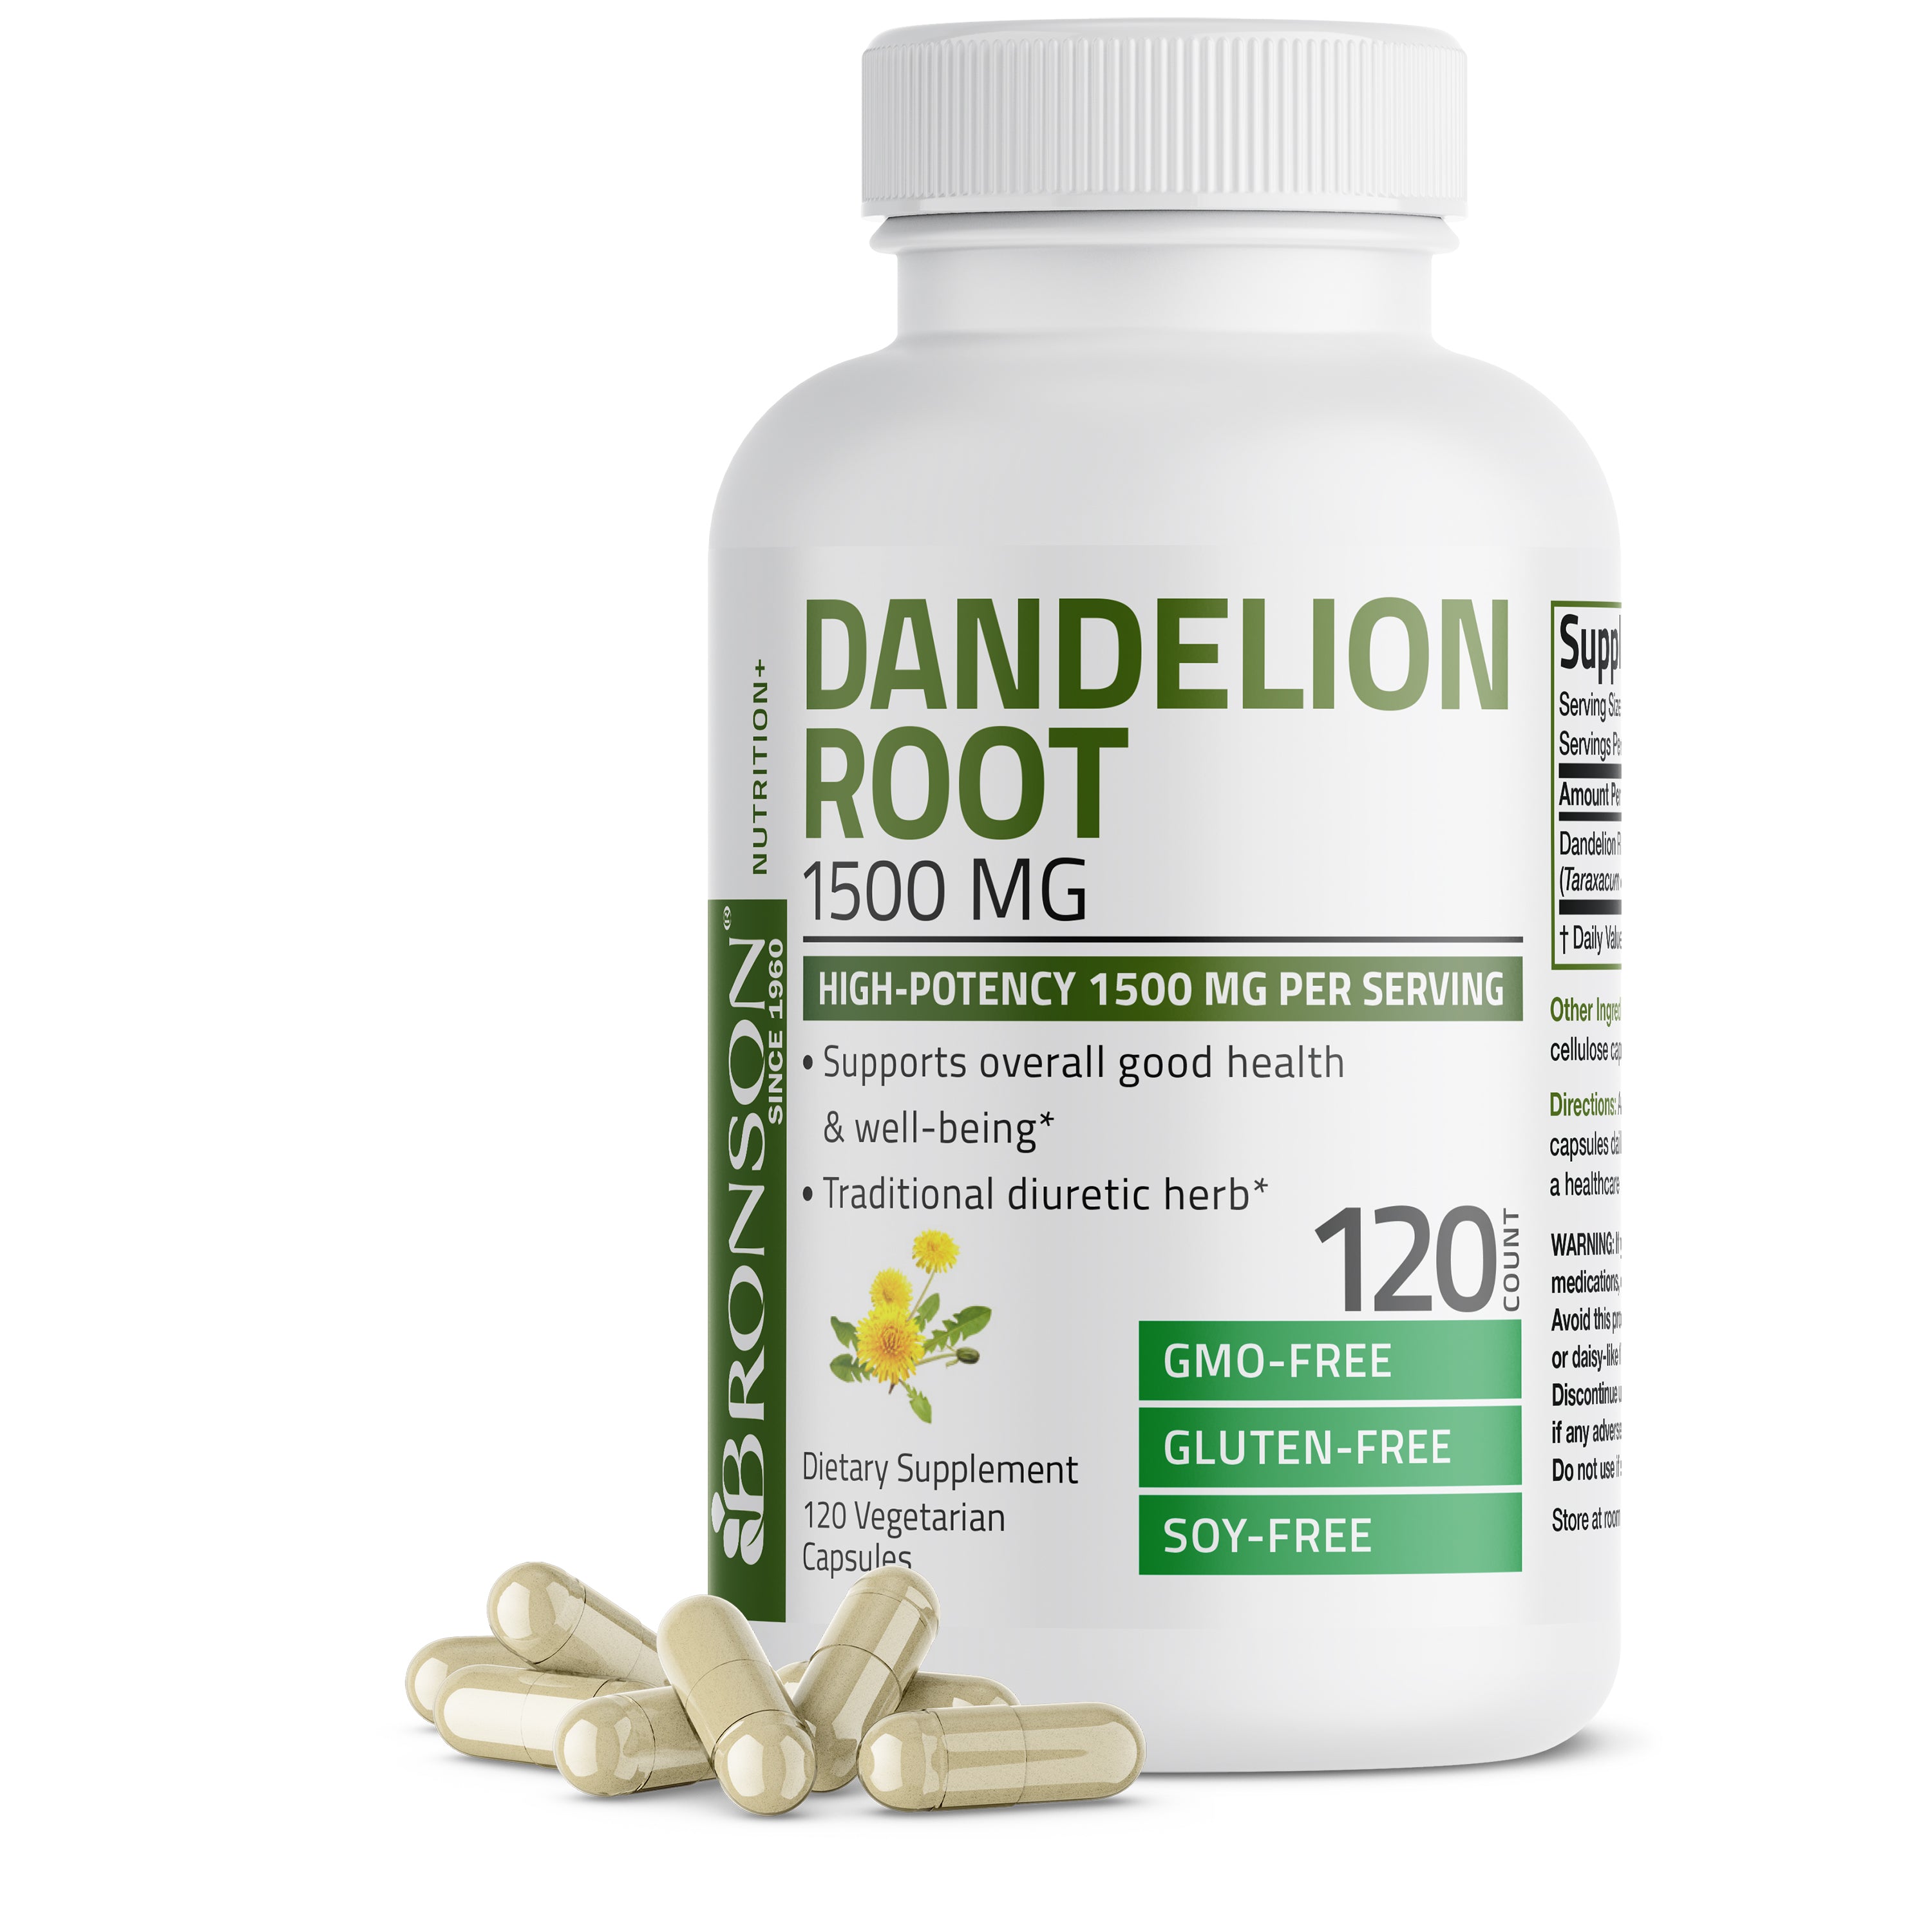 Dandelion Root 1500 MG per Serving view 1 of 6